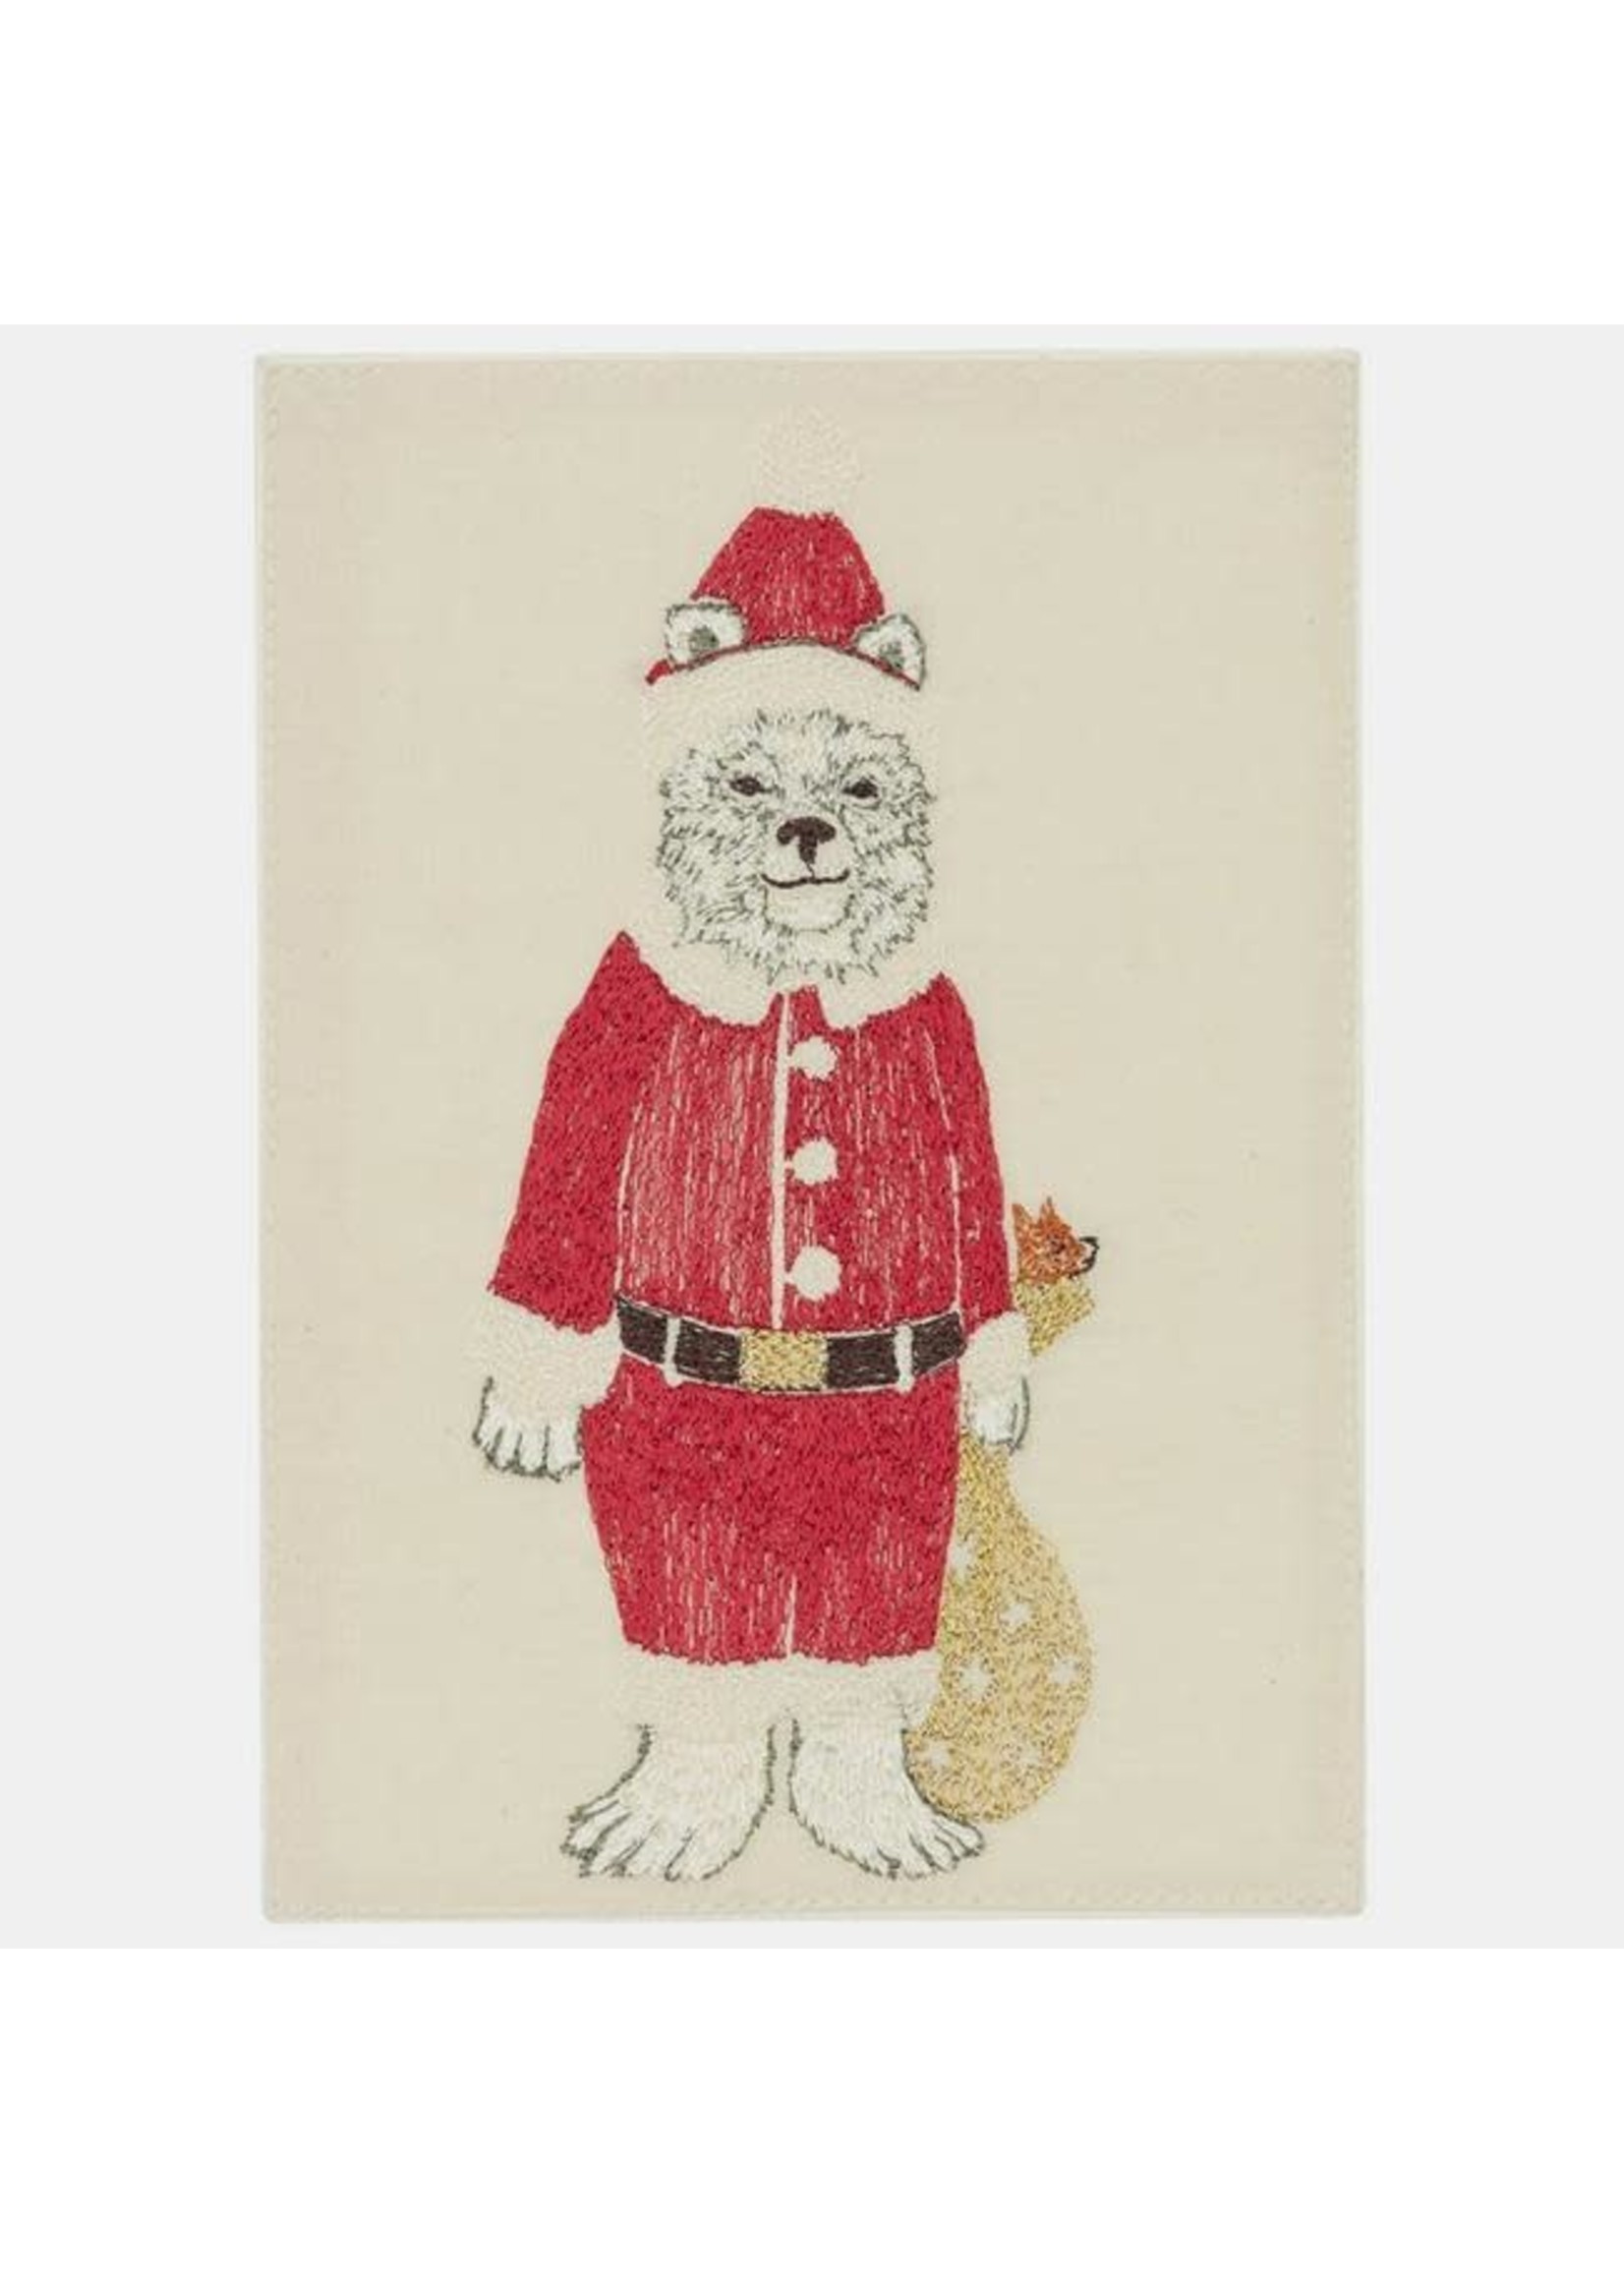 Coral and Tusk Card - Polar Bear Santa